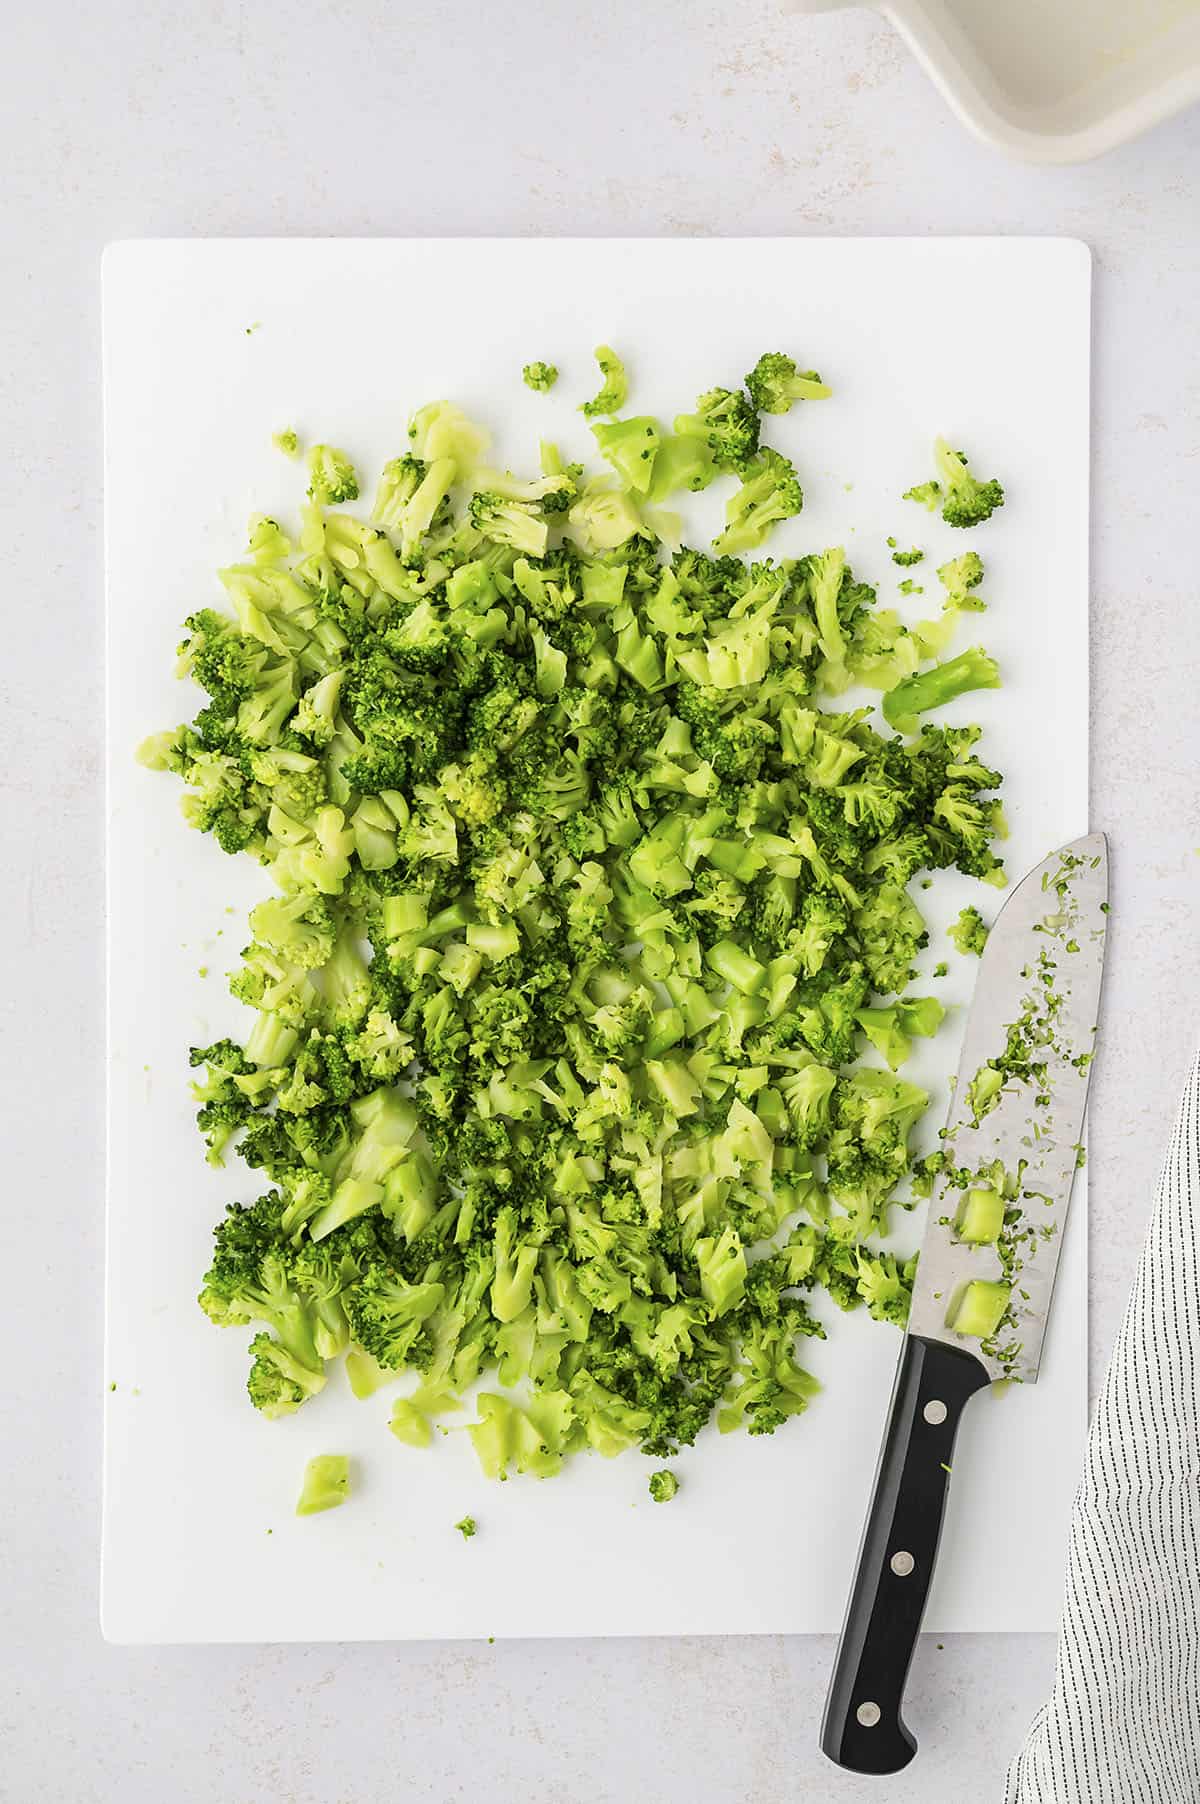 Finely chopped broccoli on a cutting board.